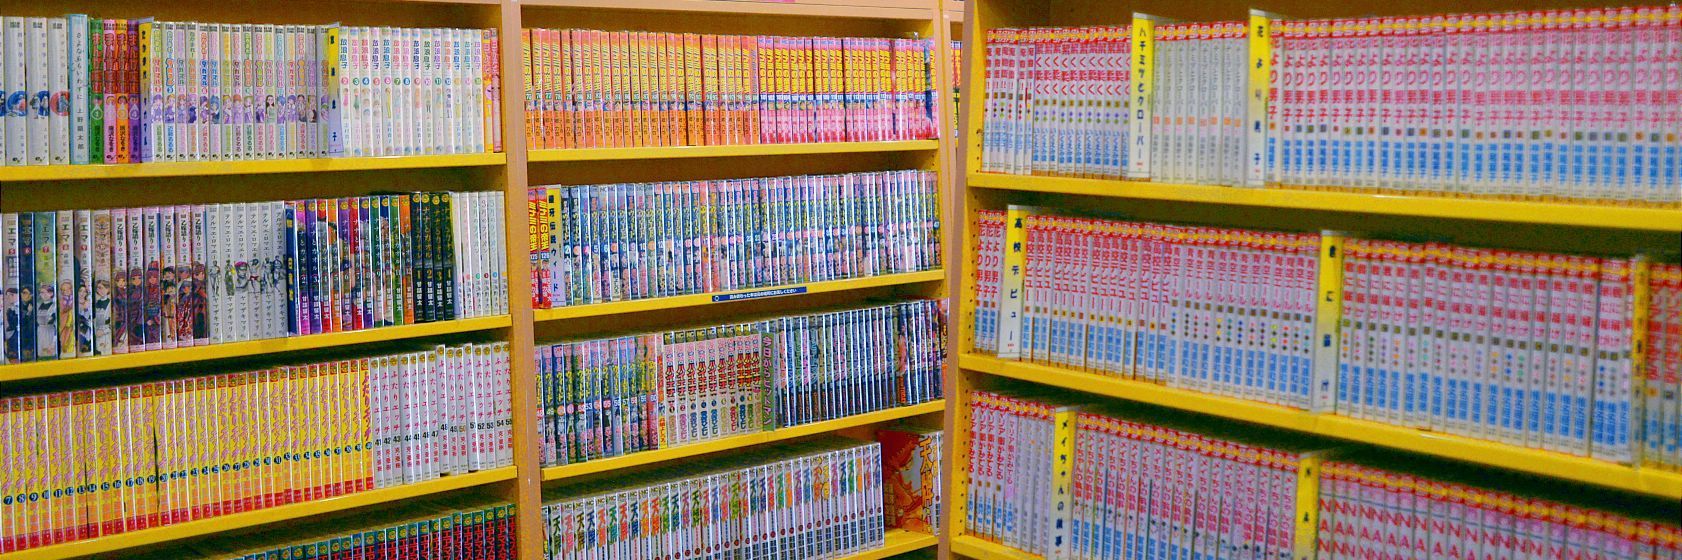 Japan Anime Industry Hits New Peak